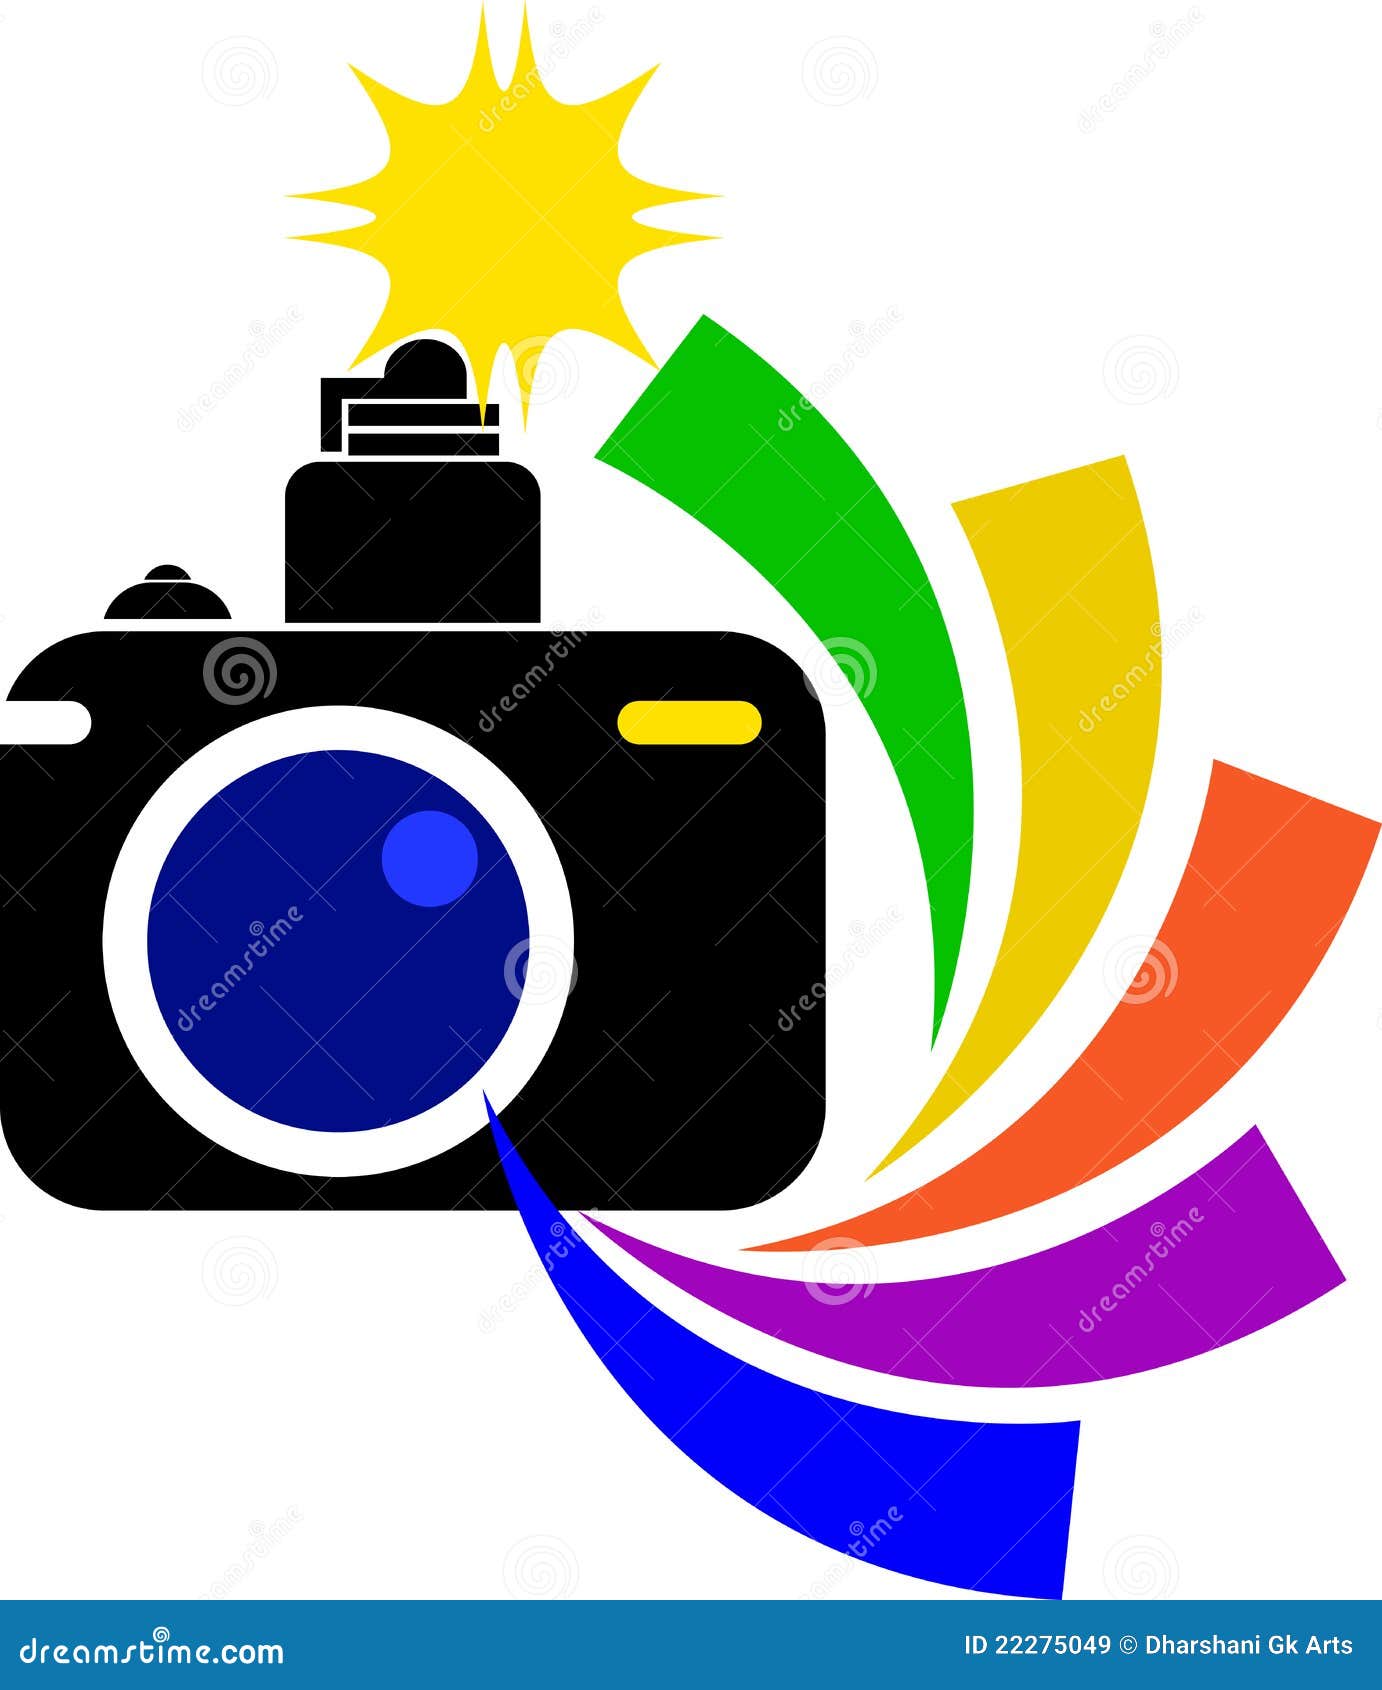 camera clip art for logo - photo #48